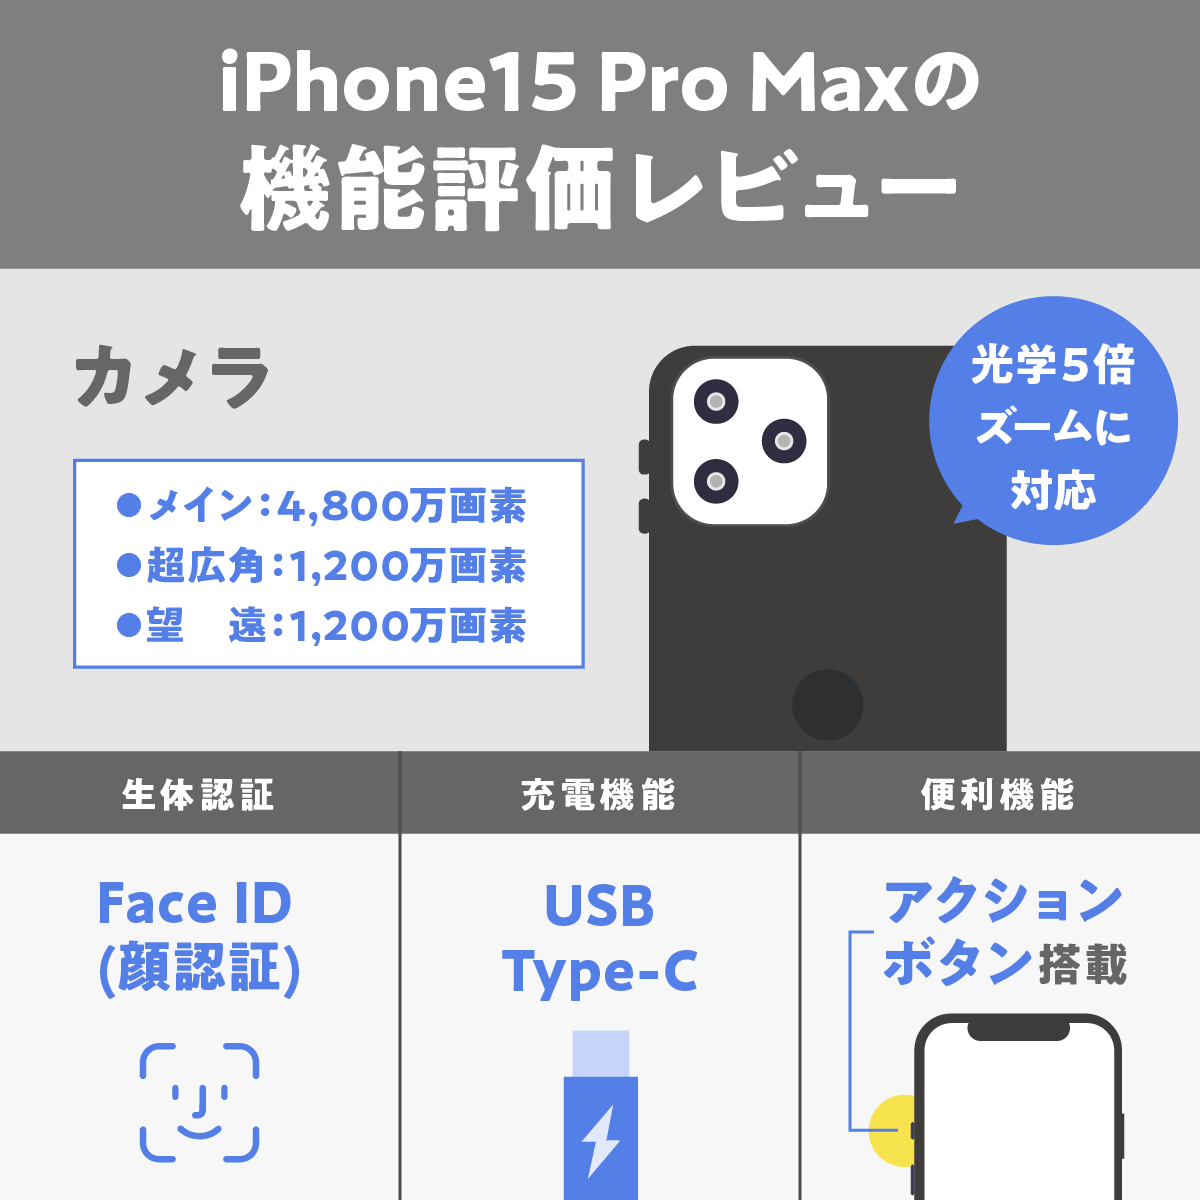 iPhone15 Pro Maxの機能を評価レビュー